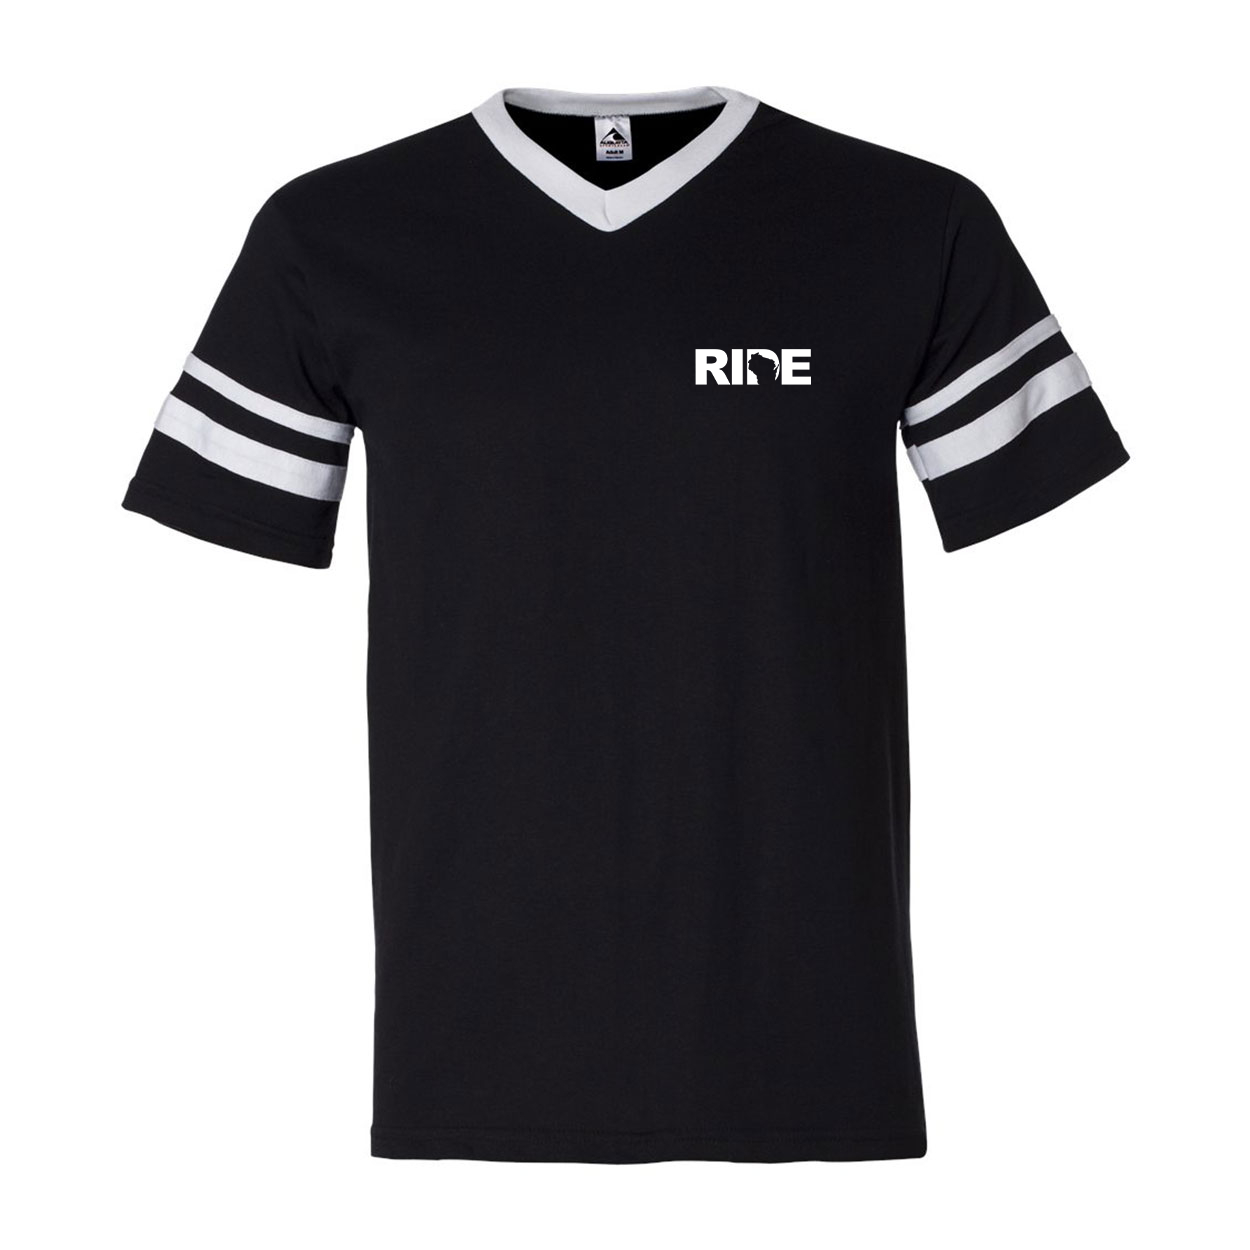 Ride Wisconsin Night Out Premium Striped Jersey T-Shirt Black/White (White Logo)